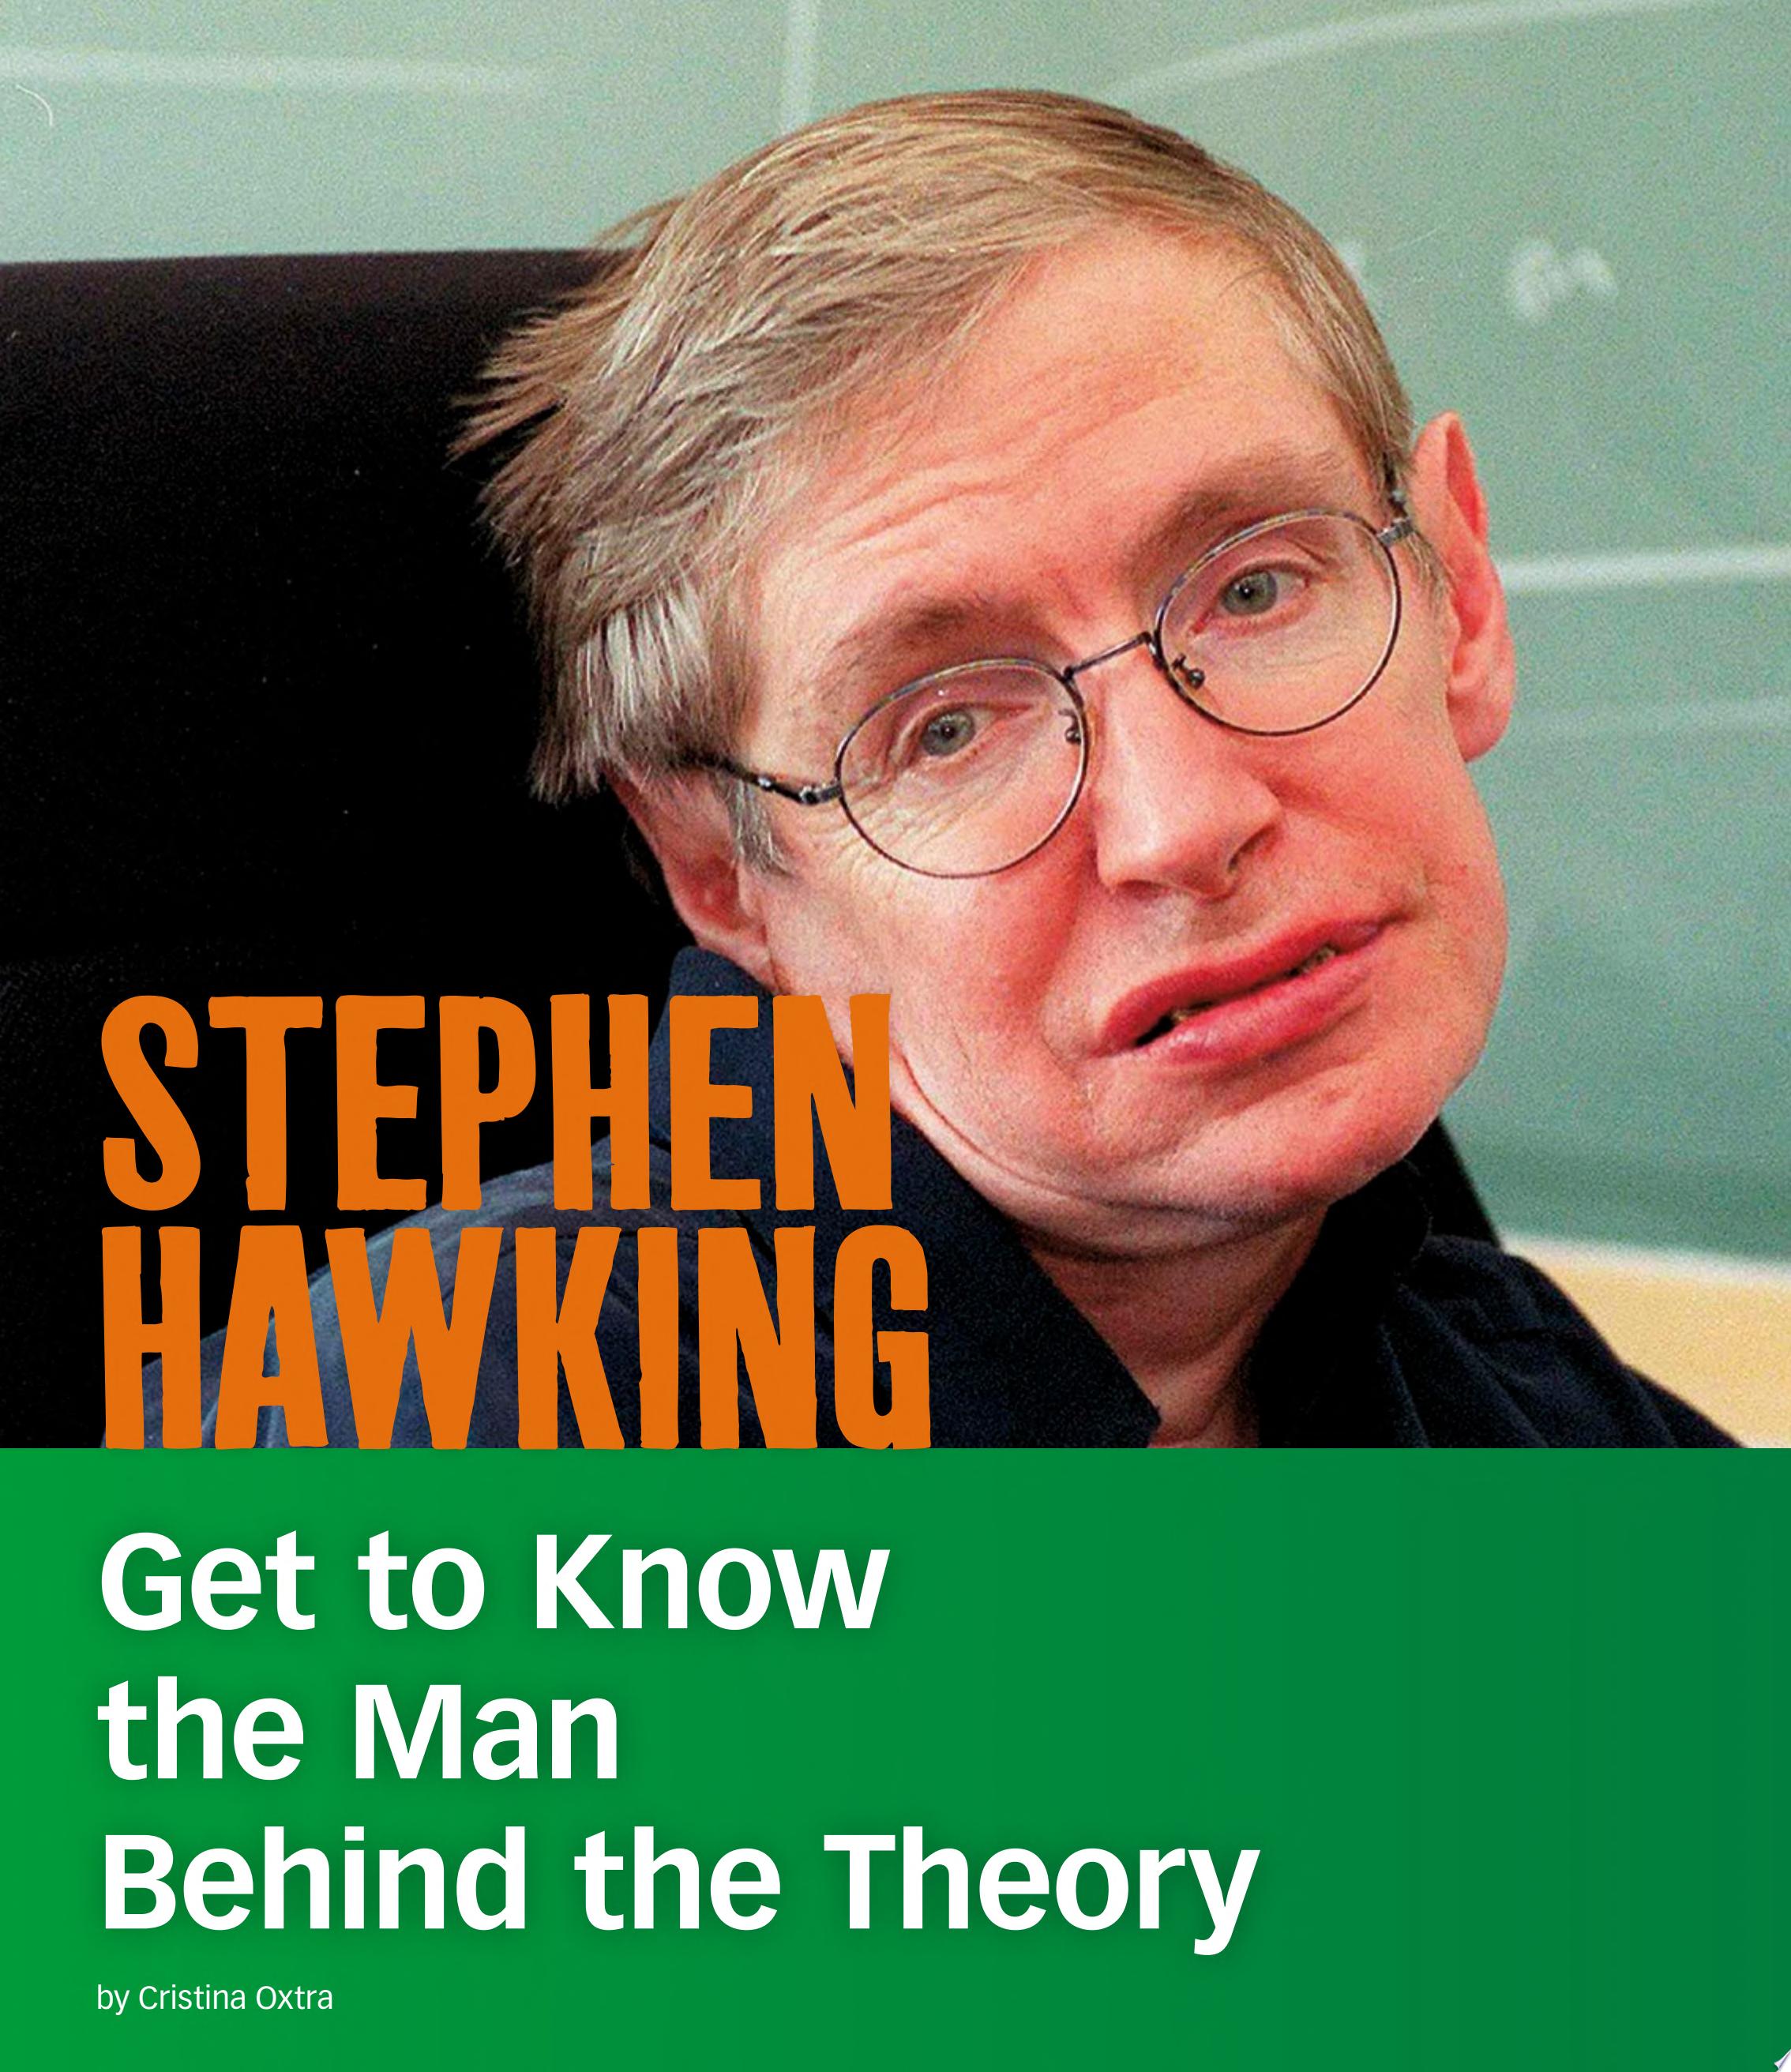 Image for "Stephen Hawking"